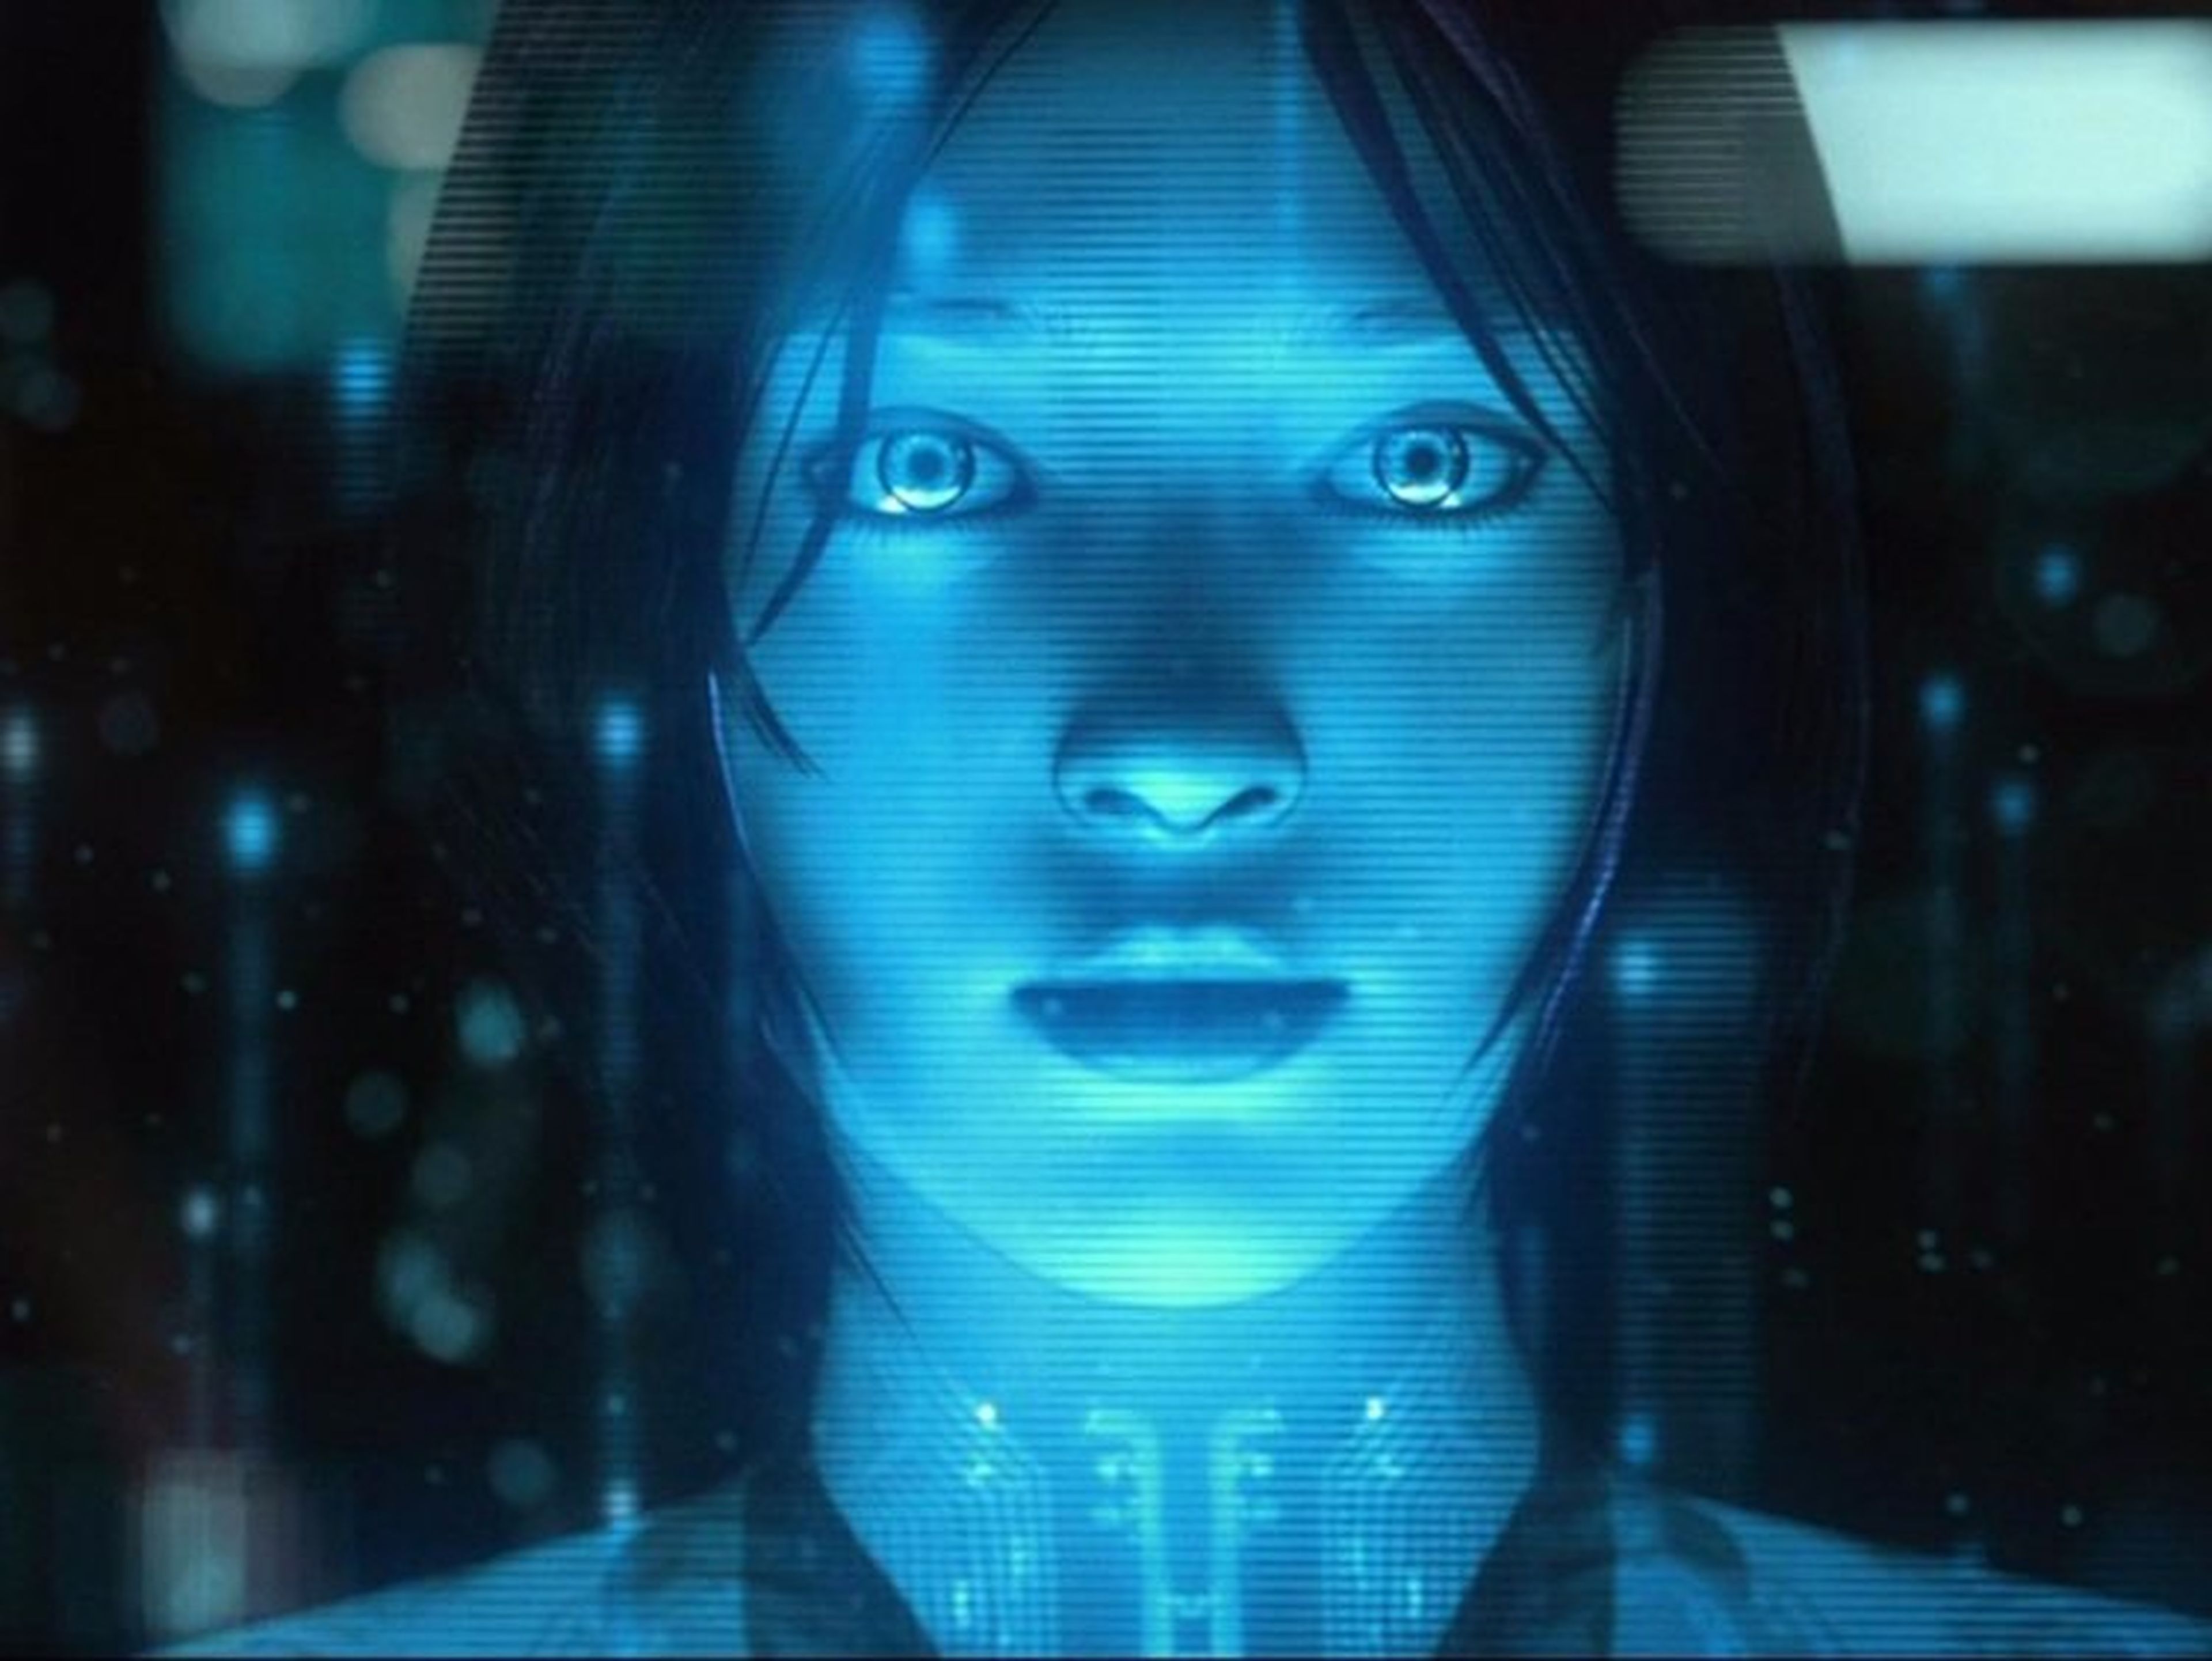 La asistente de Microsoft Cortana